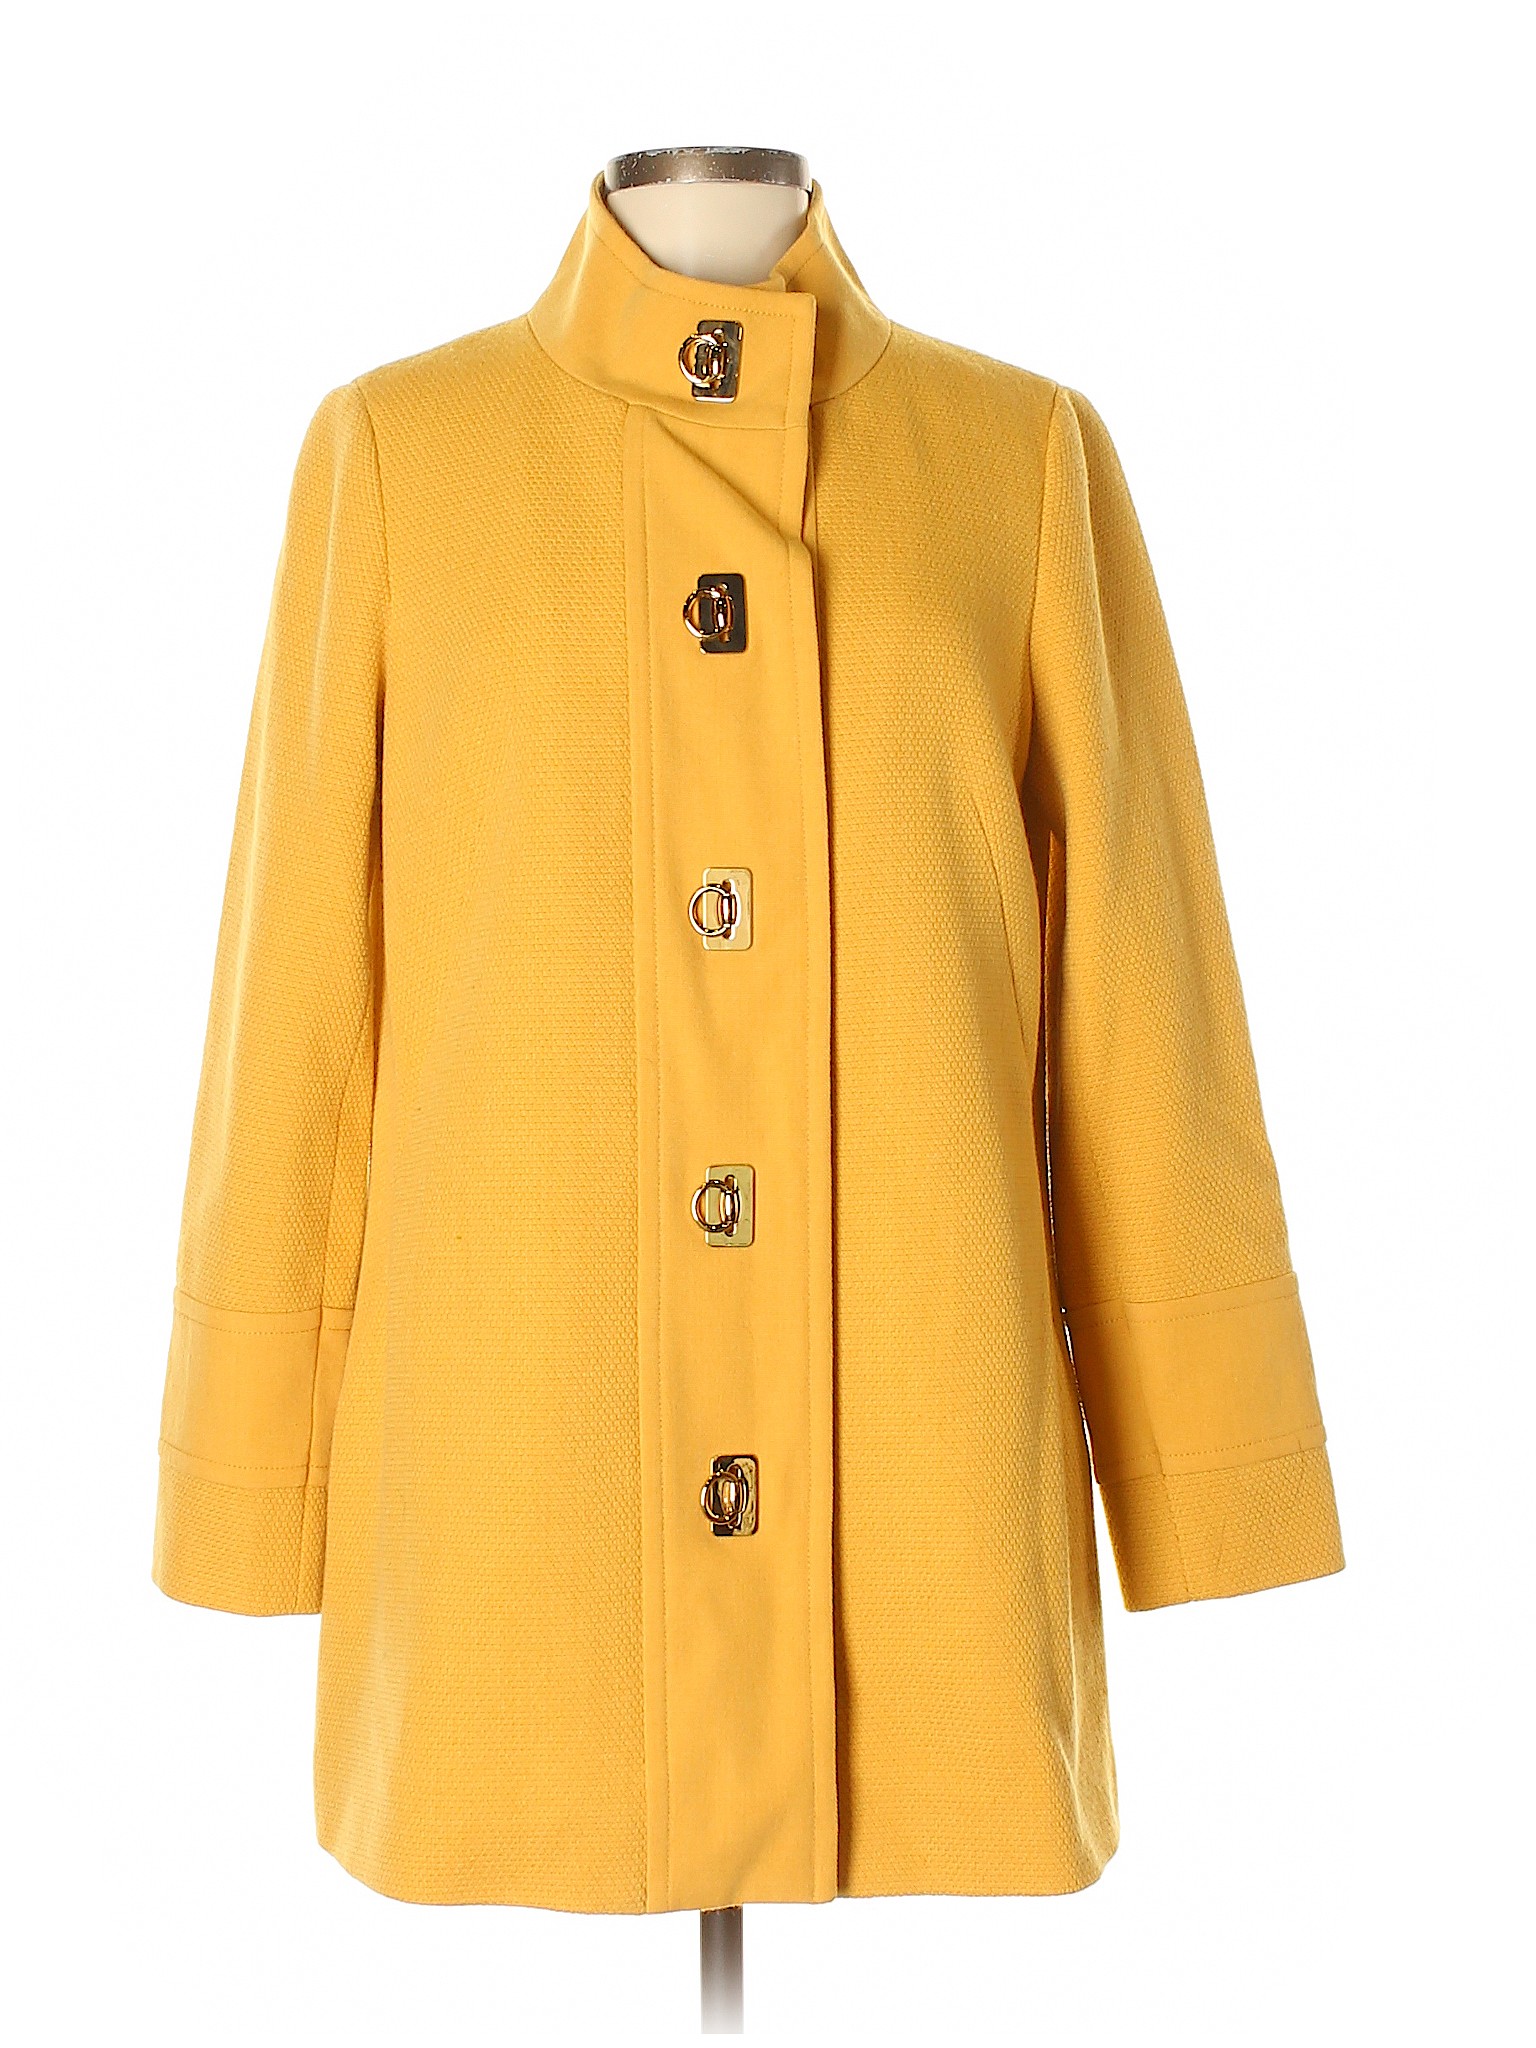 Etcetera Solid Yellow Dark Yellow Wool Coat Size 8 - 82% off | thredUP